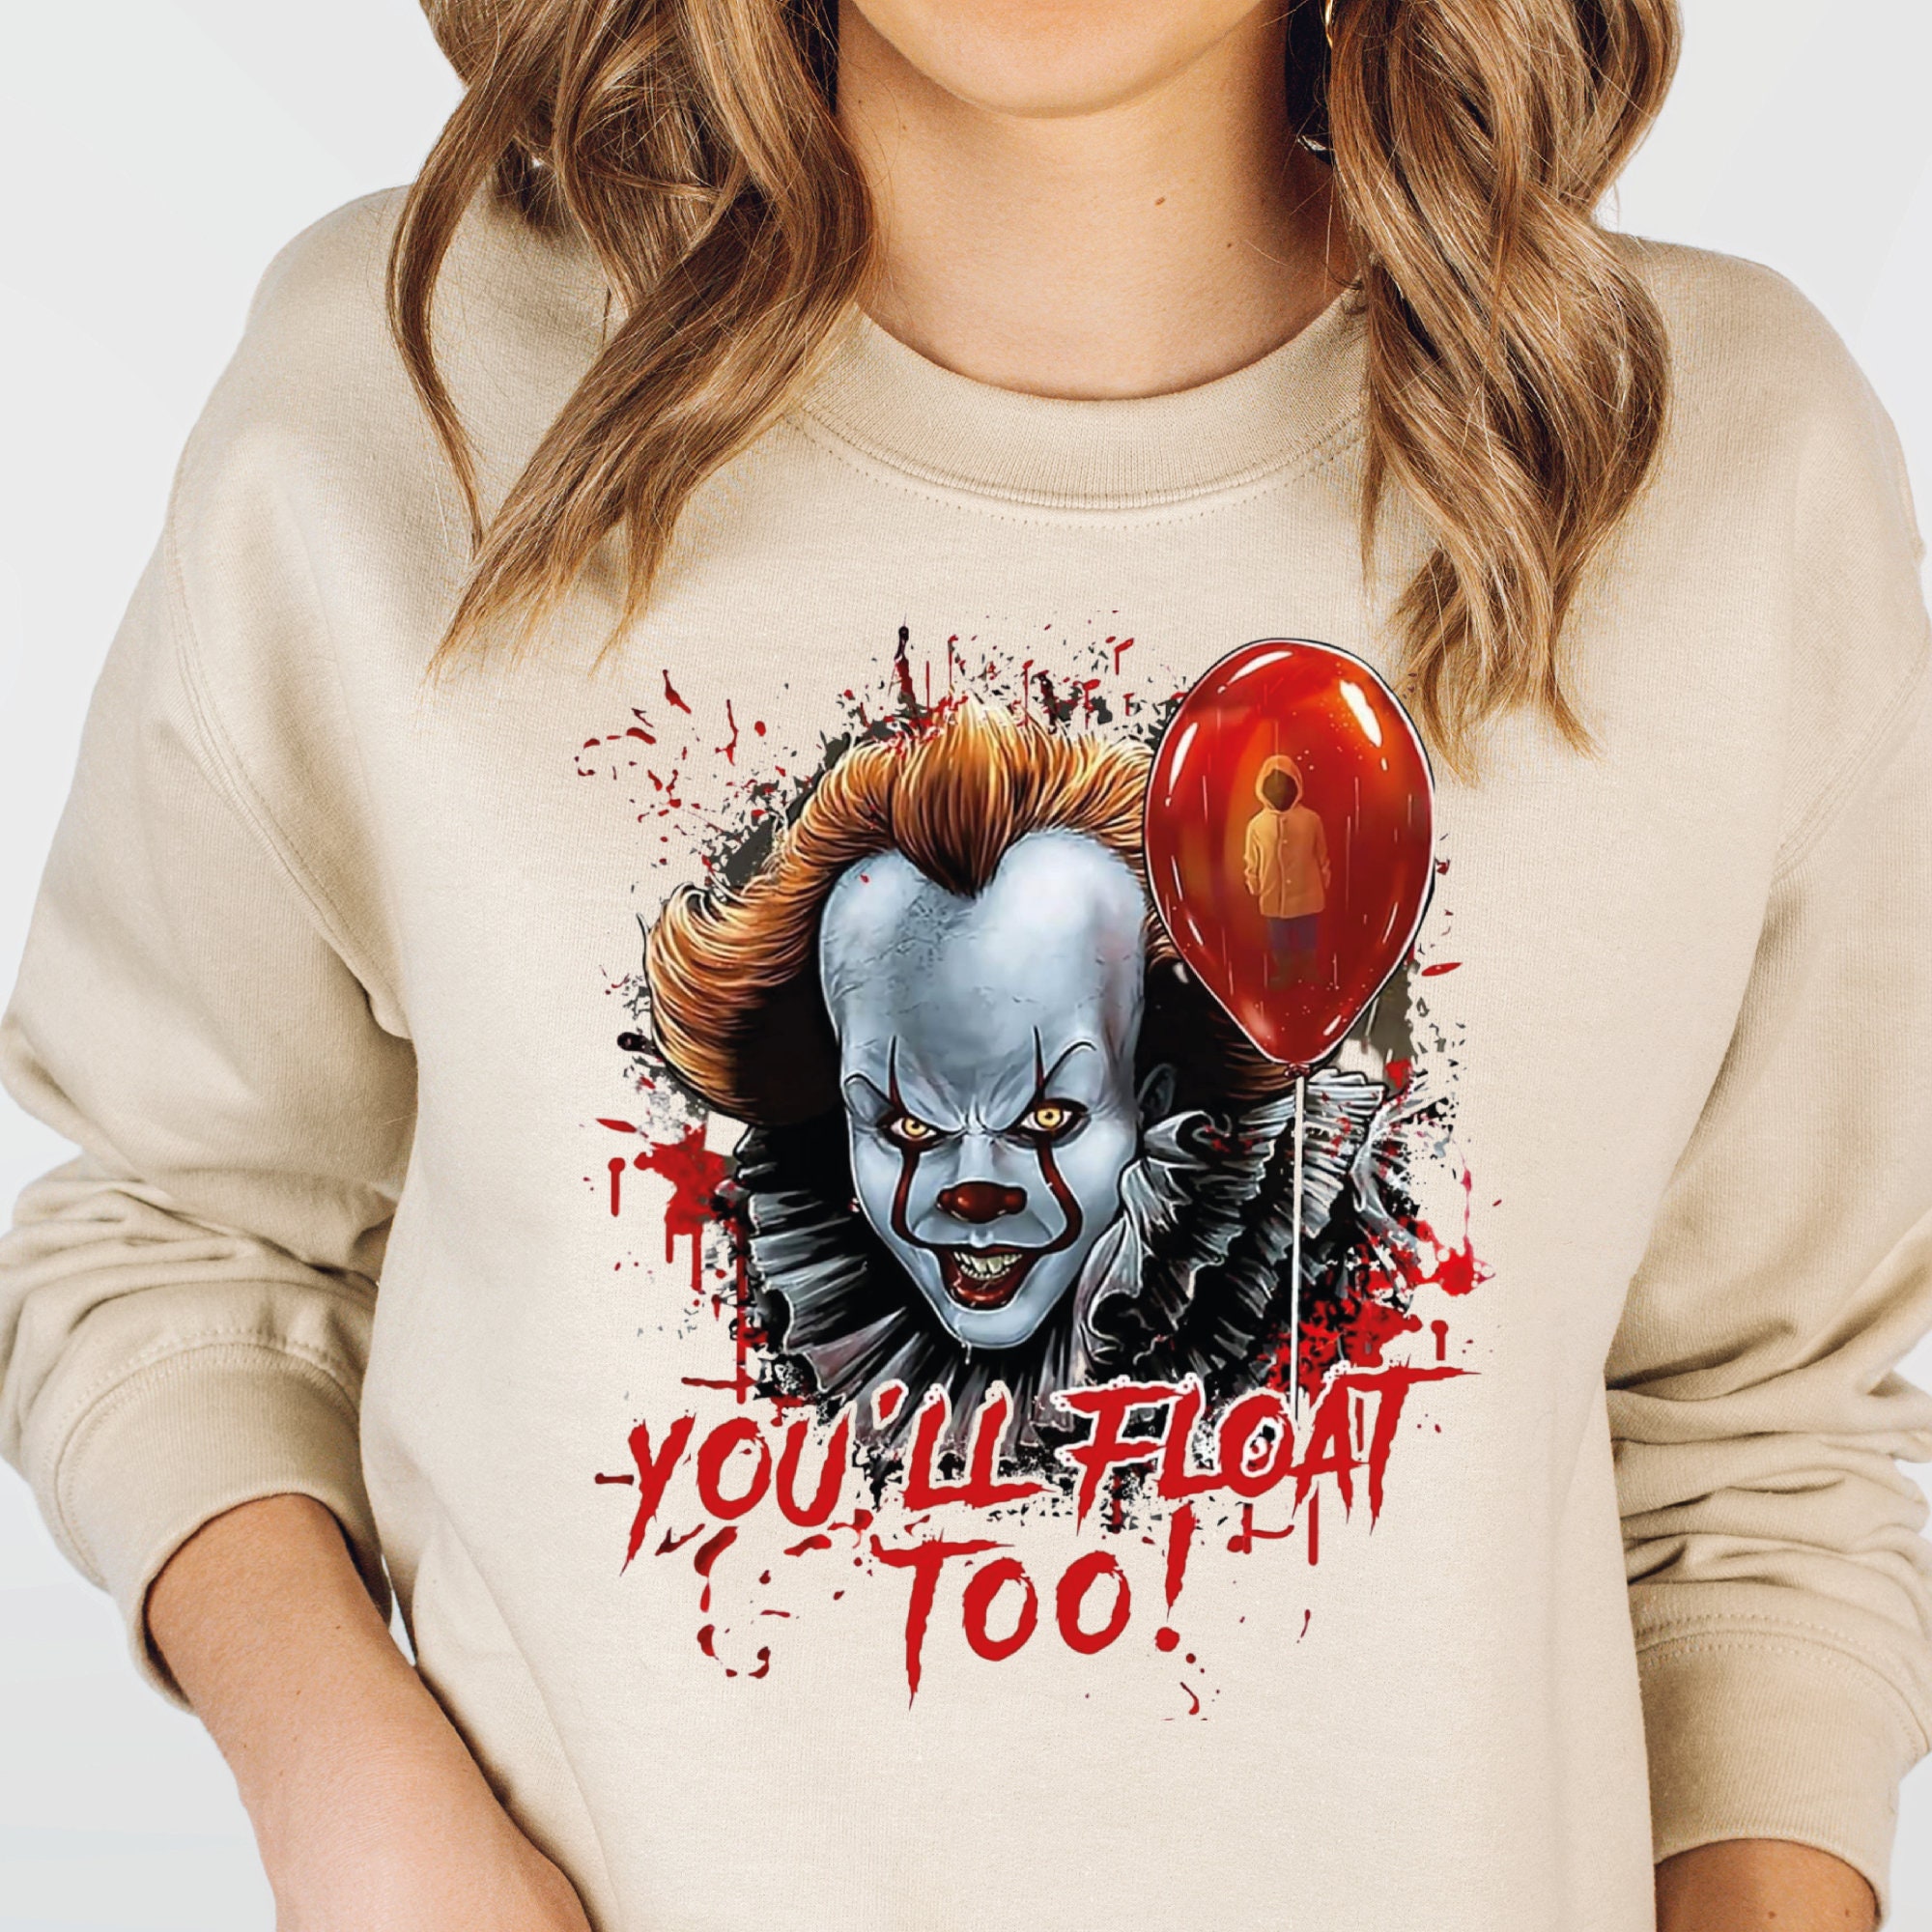 Terrifying Clown Boxy Boo shirt, hoodie, sweater, long sleeve and tank top